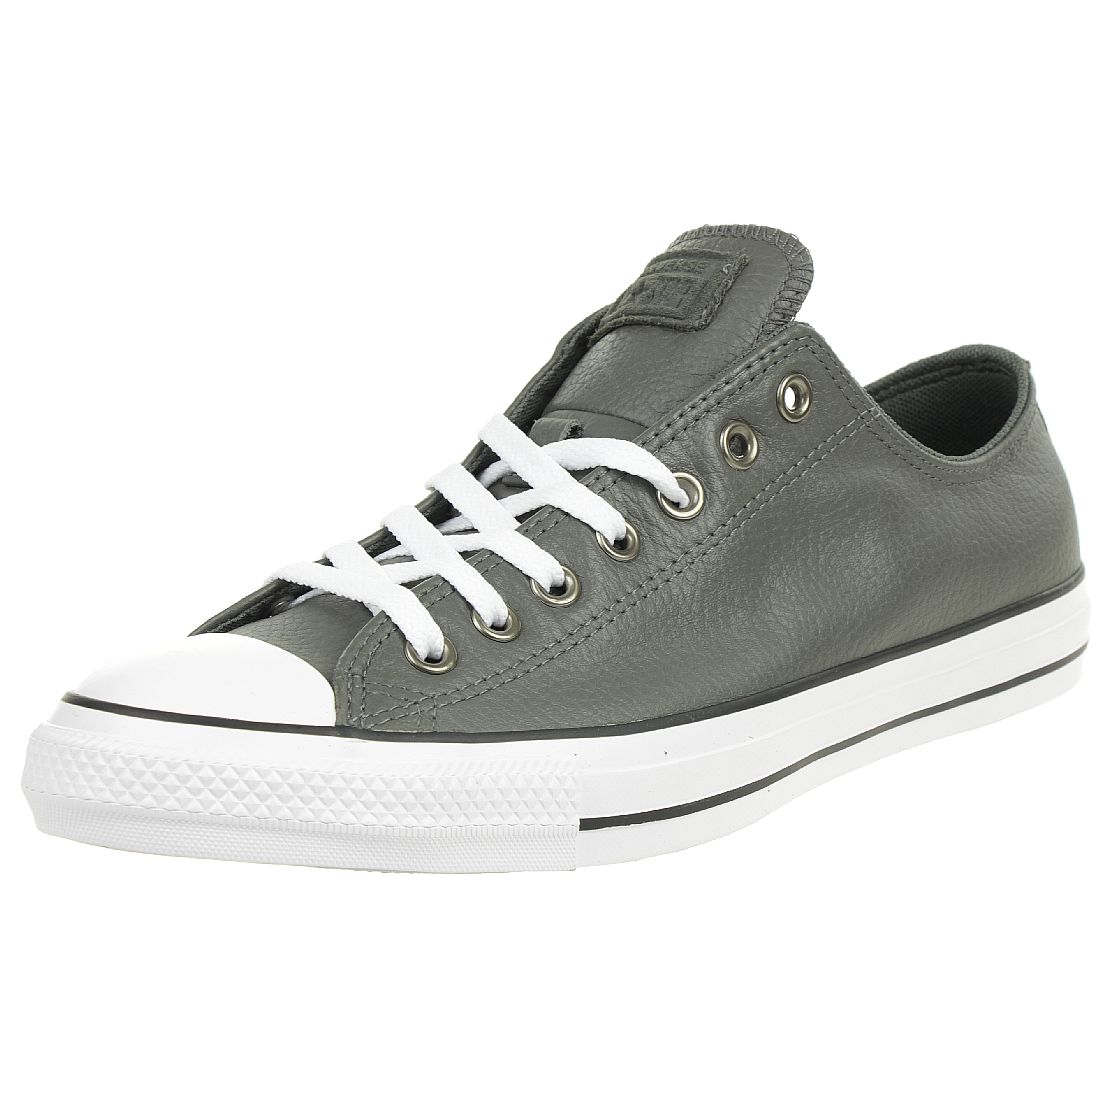 Converse CTAS OX Chuck Schuhe Leder Sneaker Carbon Grau 165193C 36 EU